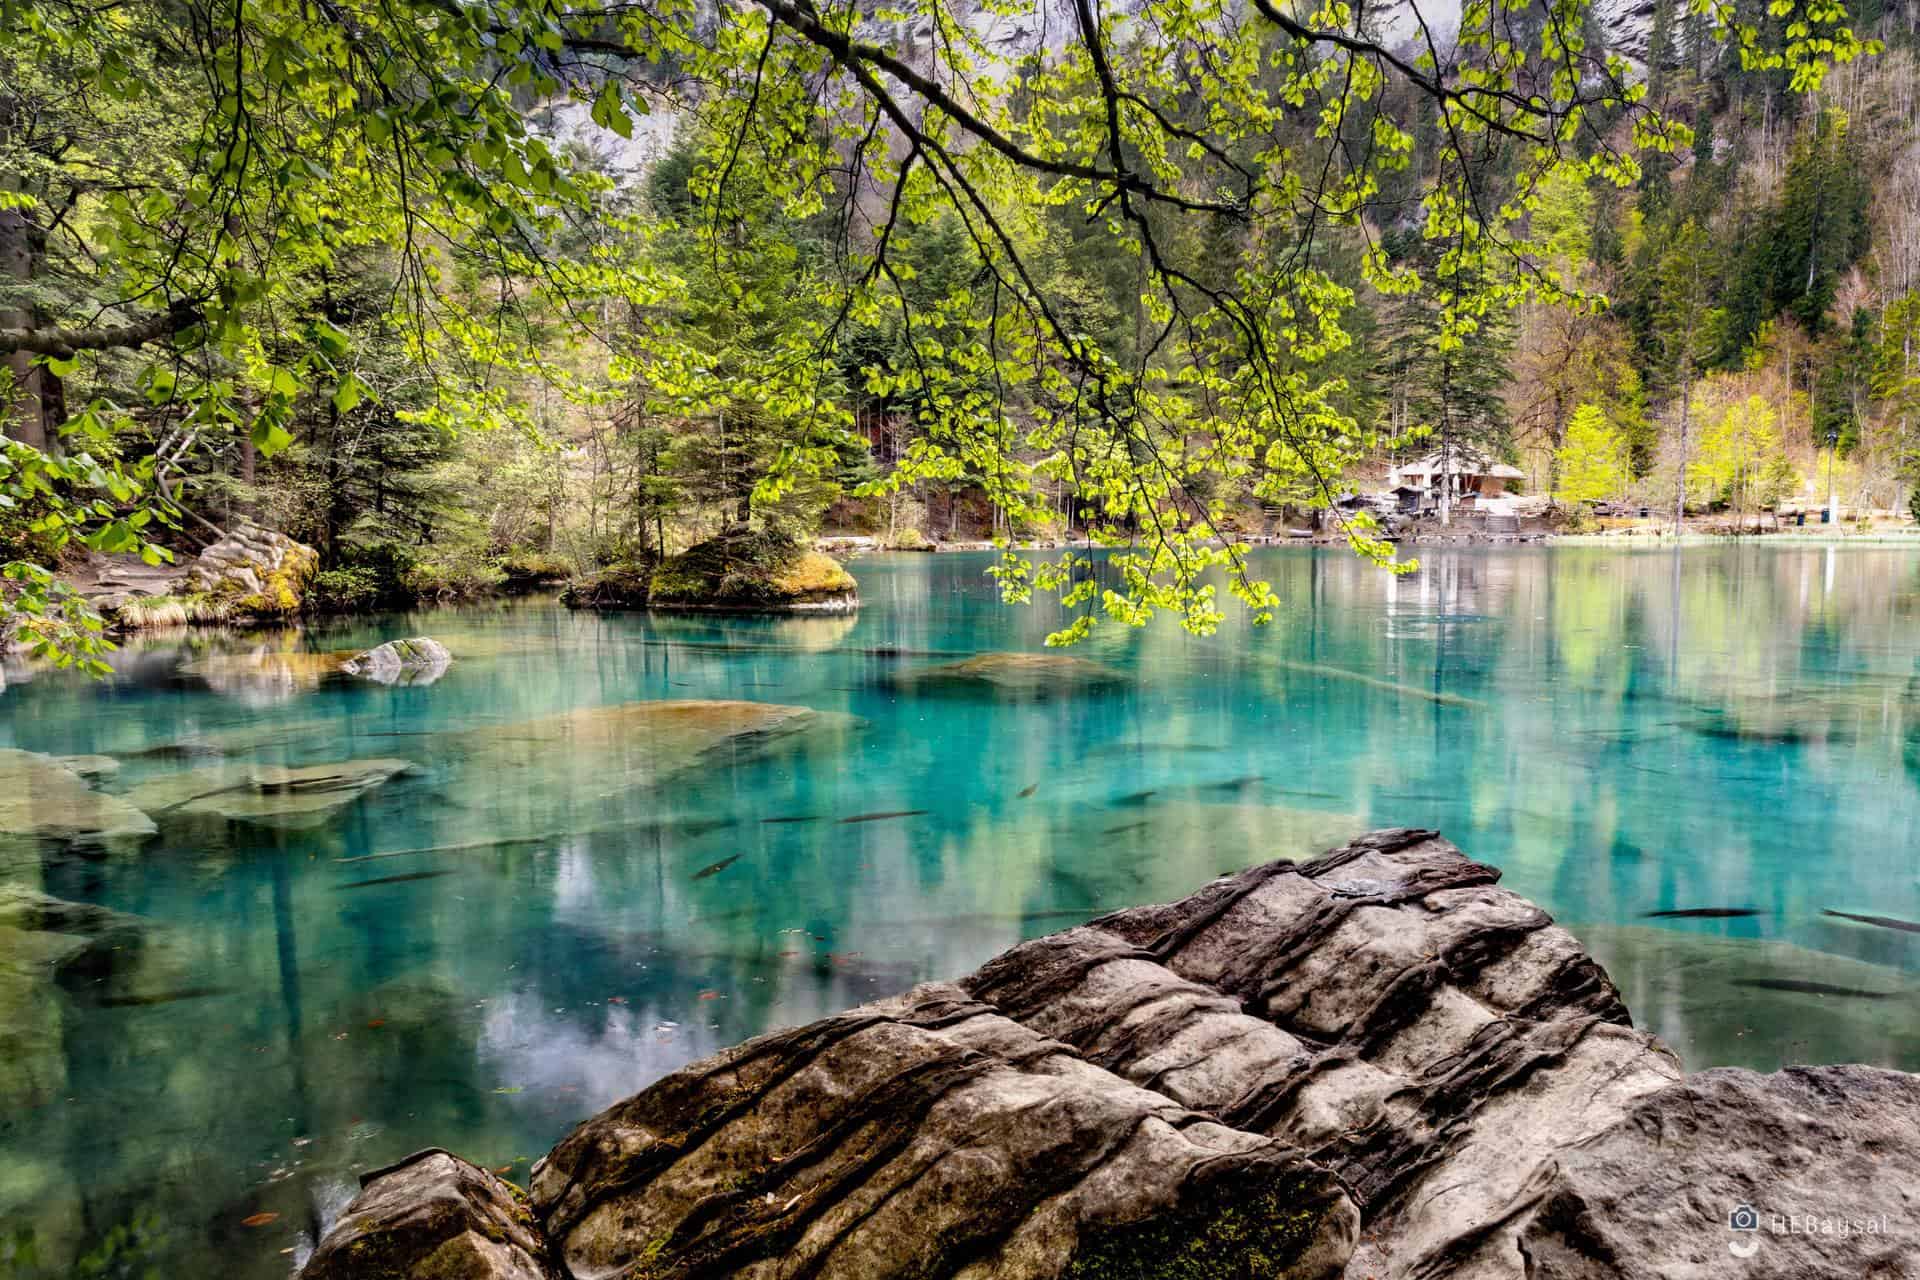 Paradis is in Lake Tseuzier, Switzerland